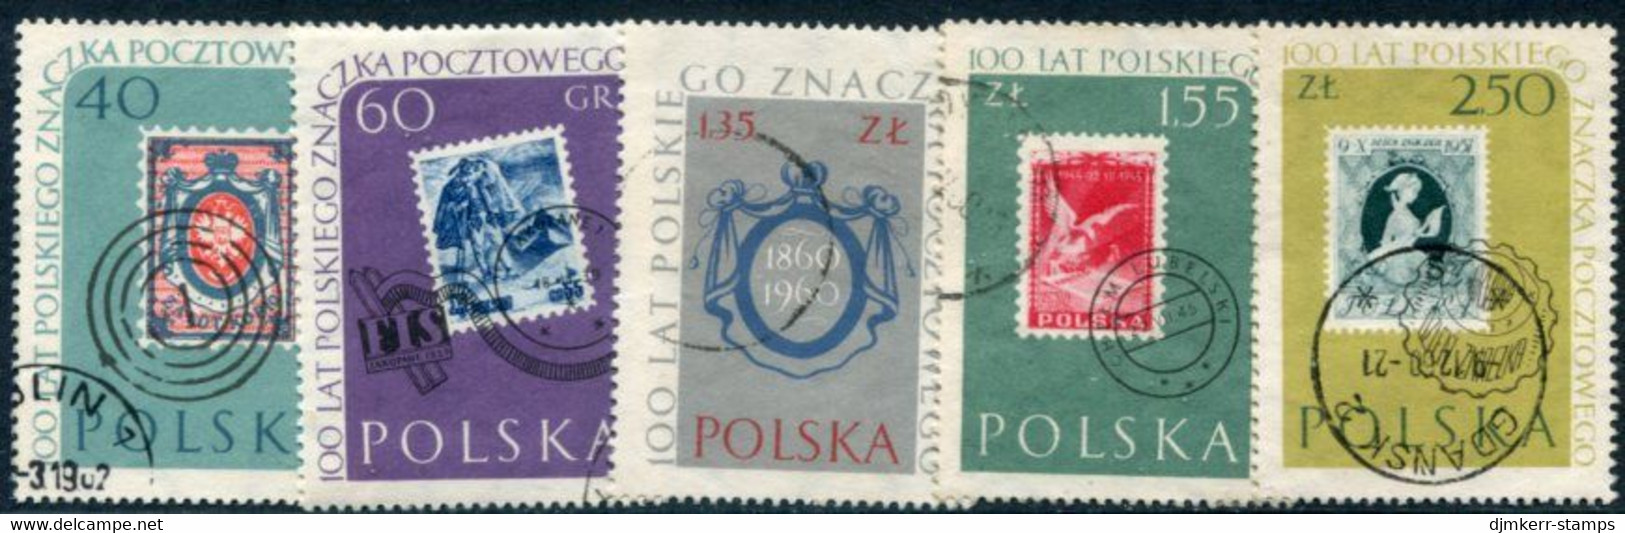 POLAND 1960 Stamp Centenary Set Used.  Michel 1151-55 - Oblitérés